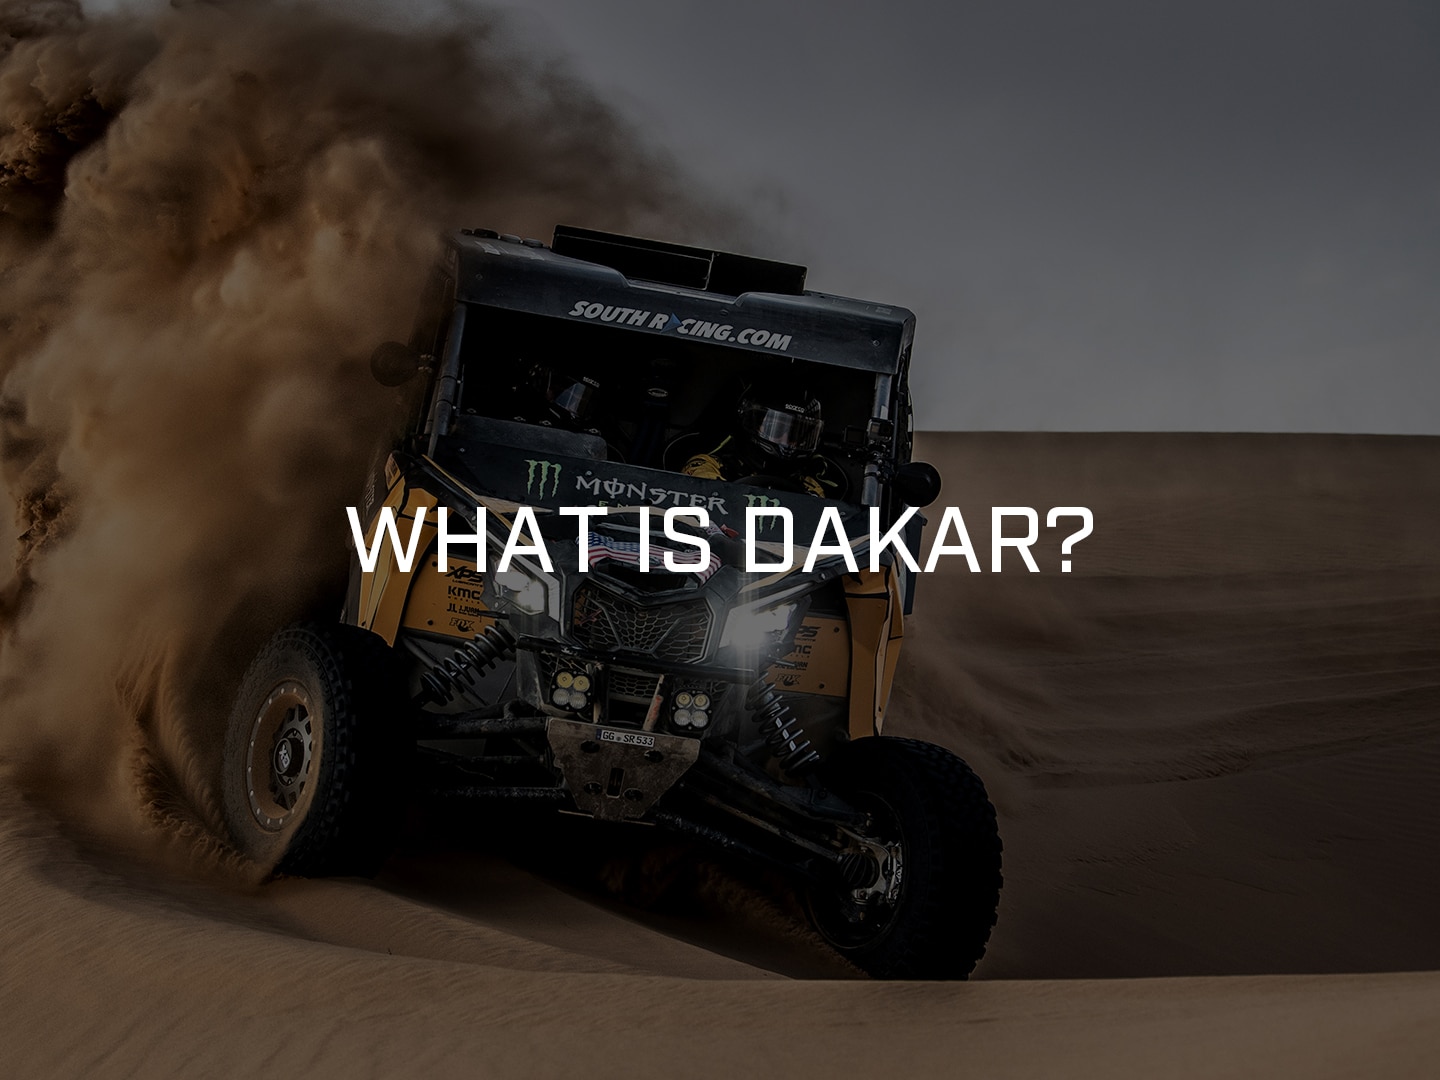 Hvad er Dakar?